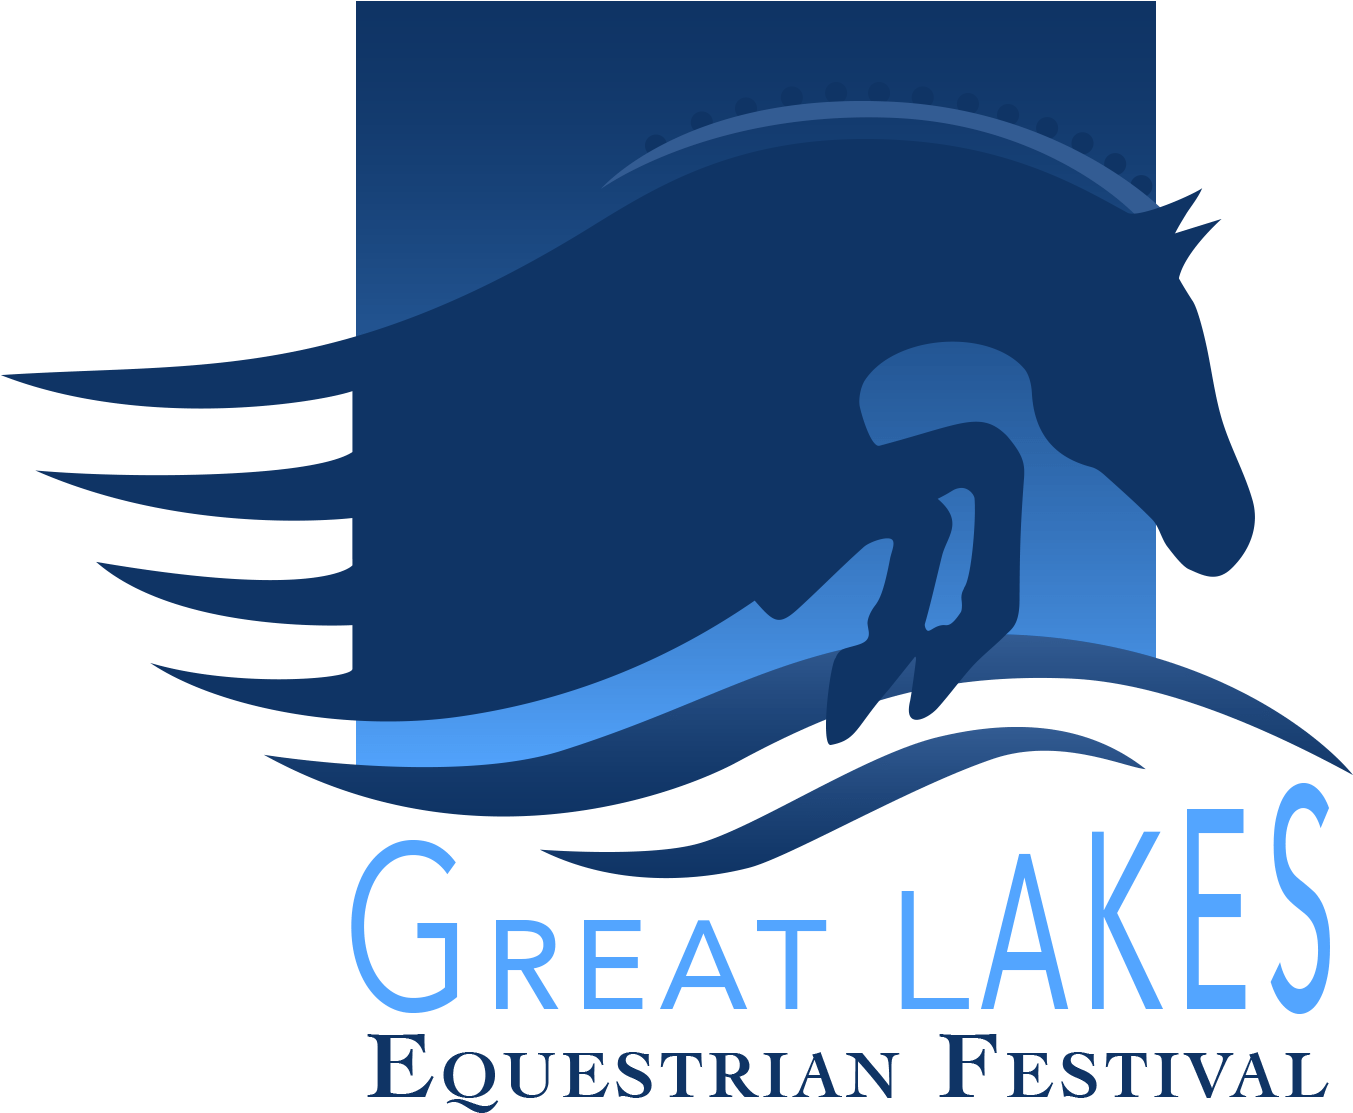 Great Lakes Equestrian Festival Logo